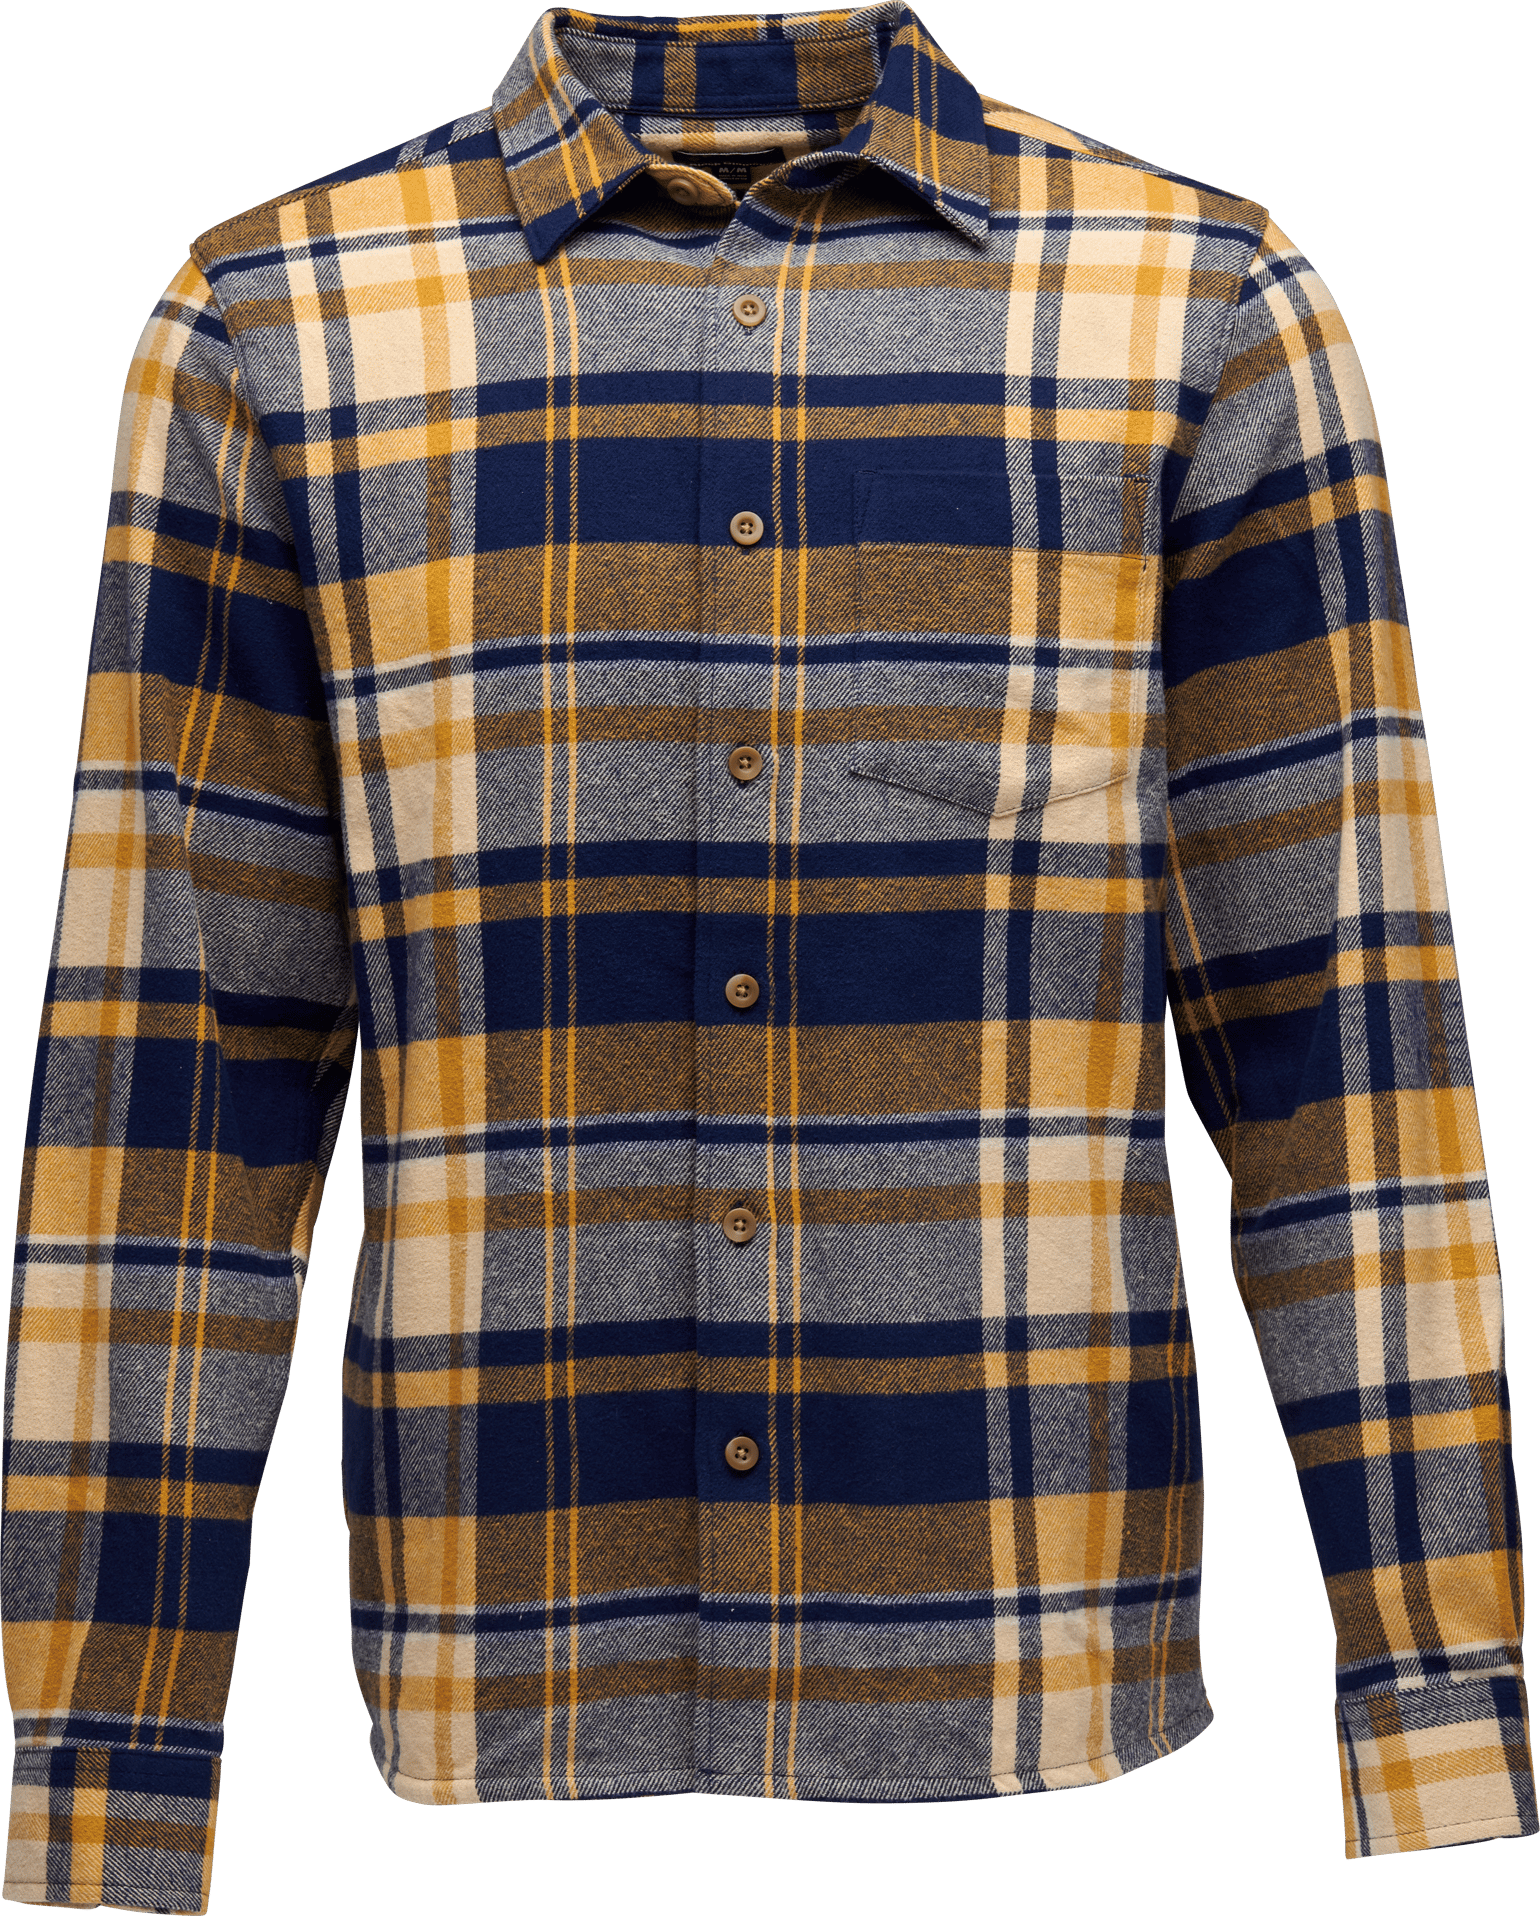 Black Diamond Men's Project Flannel Shirt Indigo-Gold Plaid